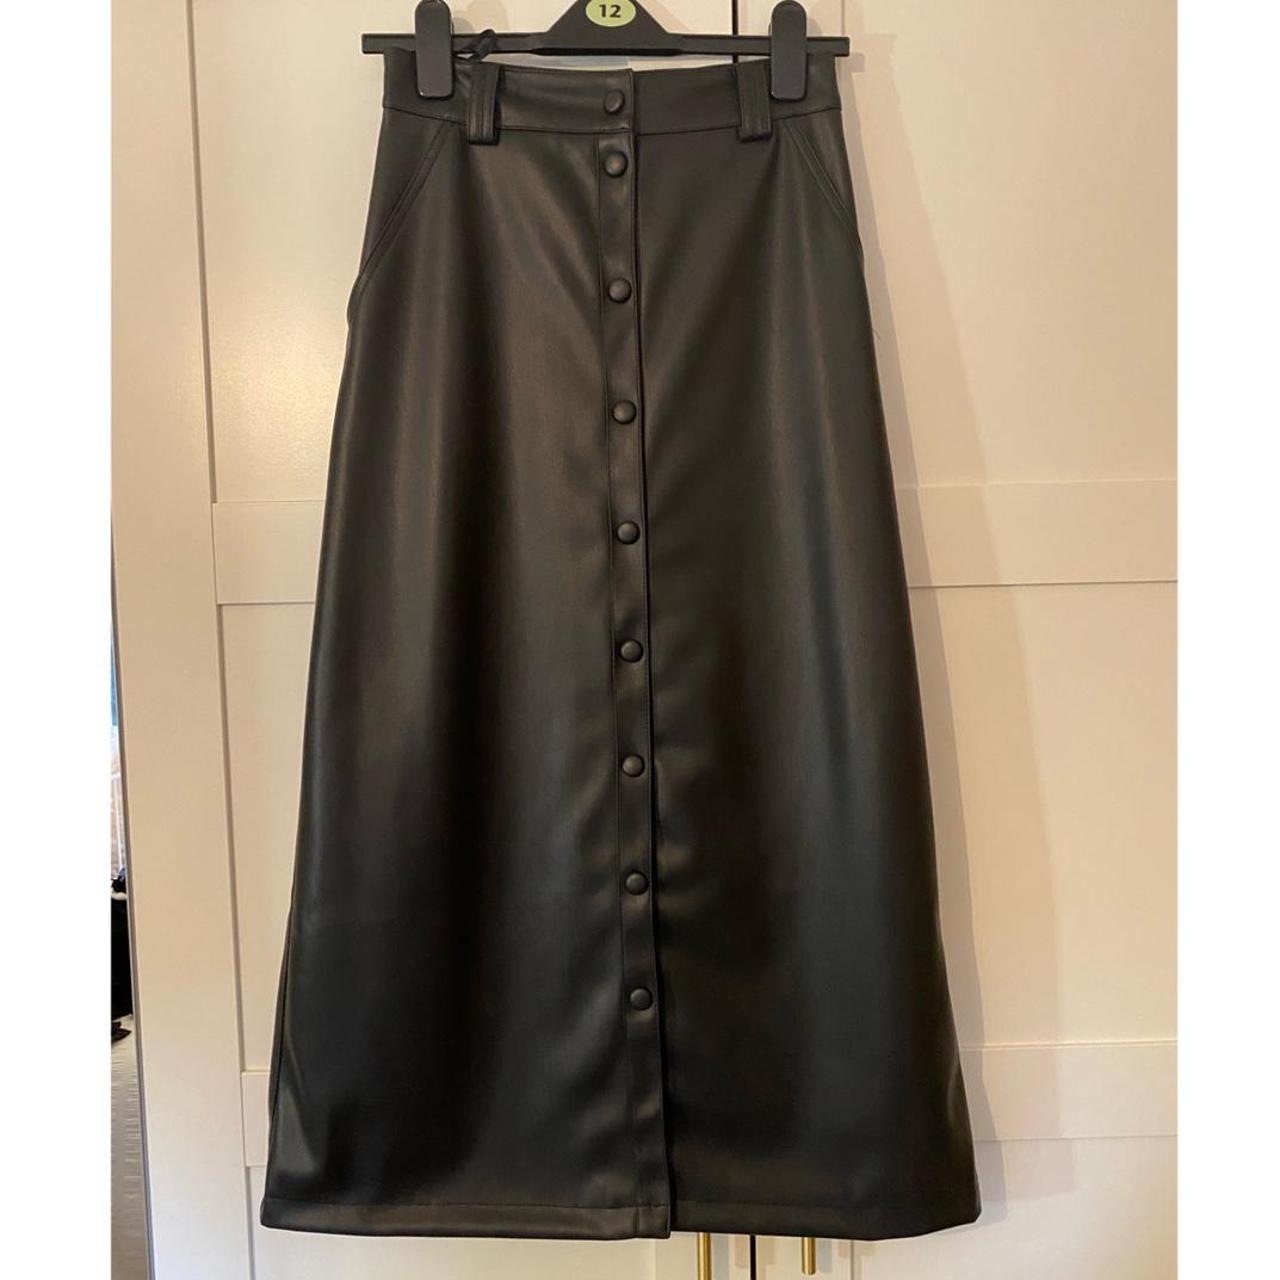 Button front black leather midi skirt - Depop